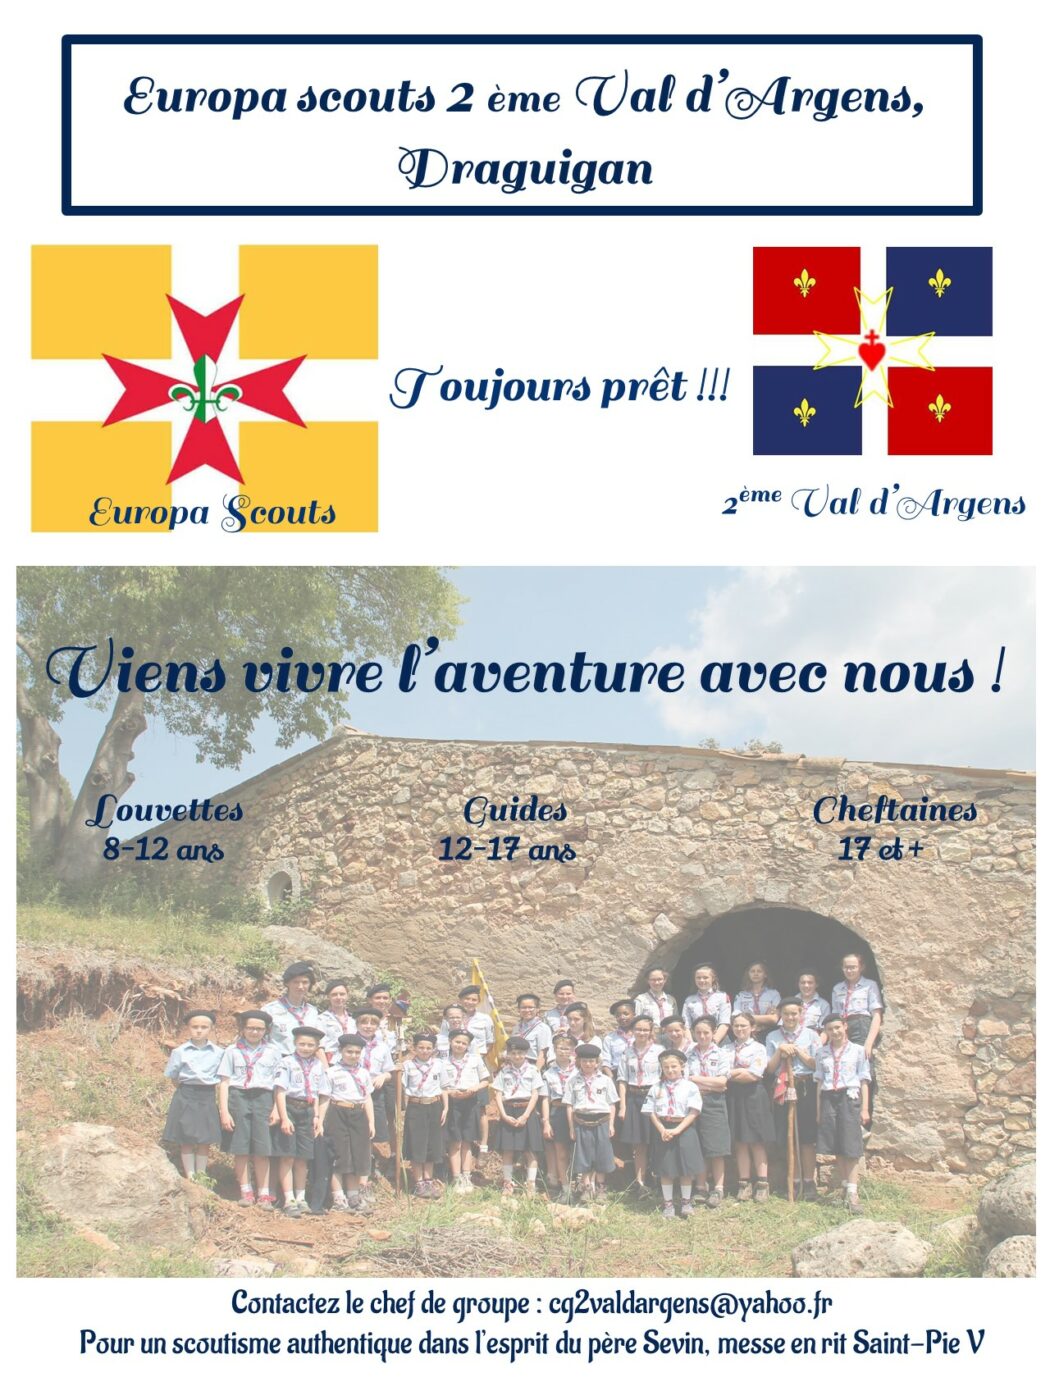 Les Europa Scouts de Draguignan recrutent